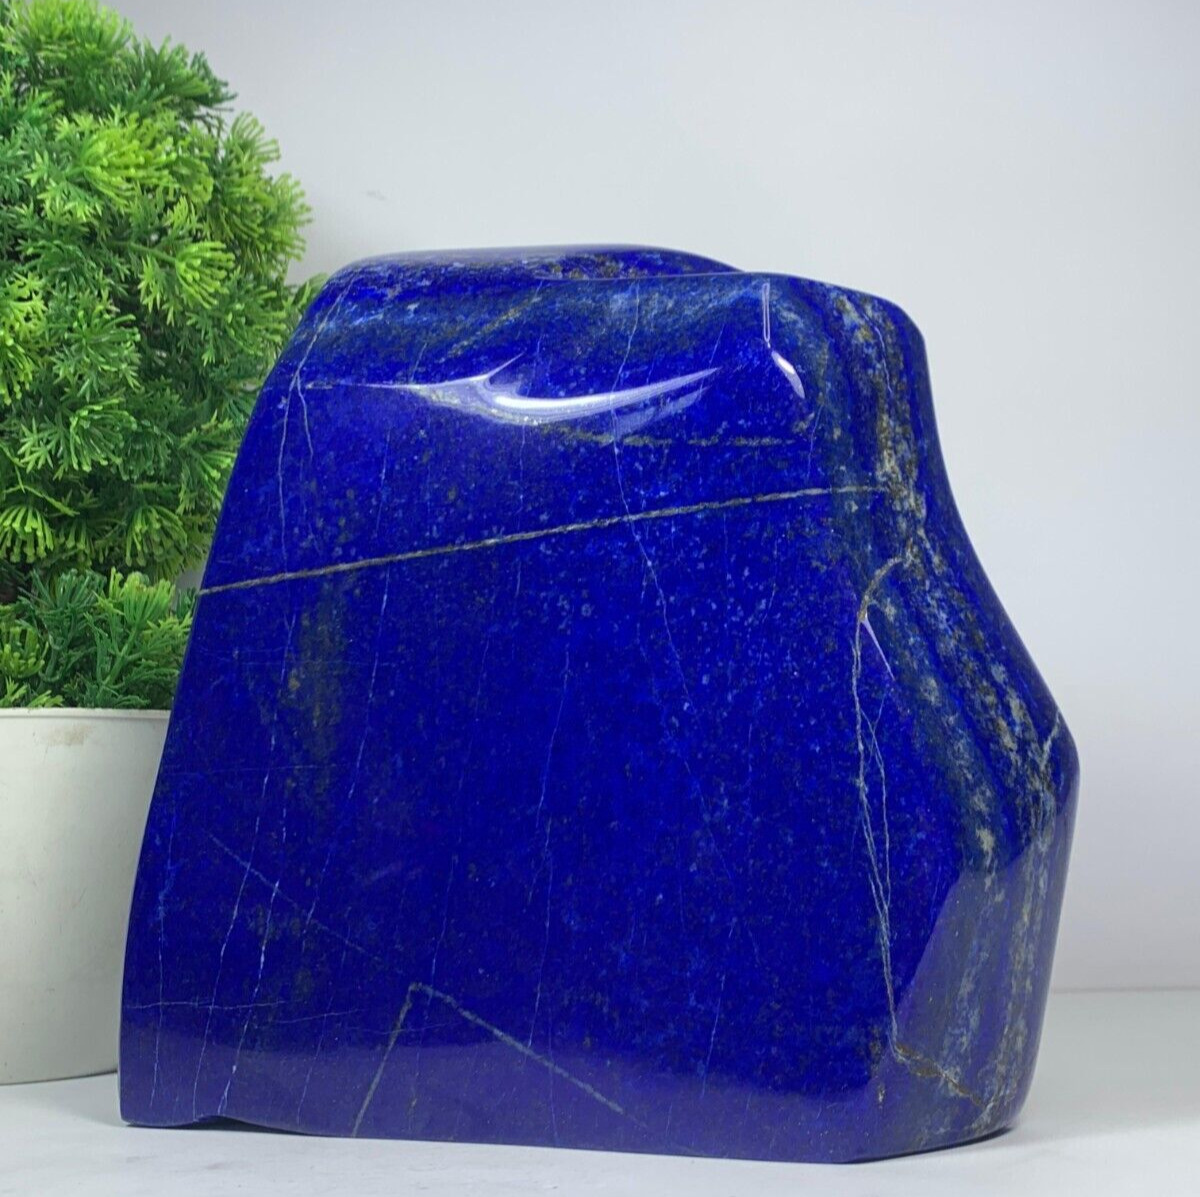 1973Gram Blue Lapis Lazuli Freeform Polished Rough Crystal Slab From Afghanistan